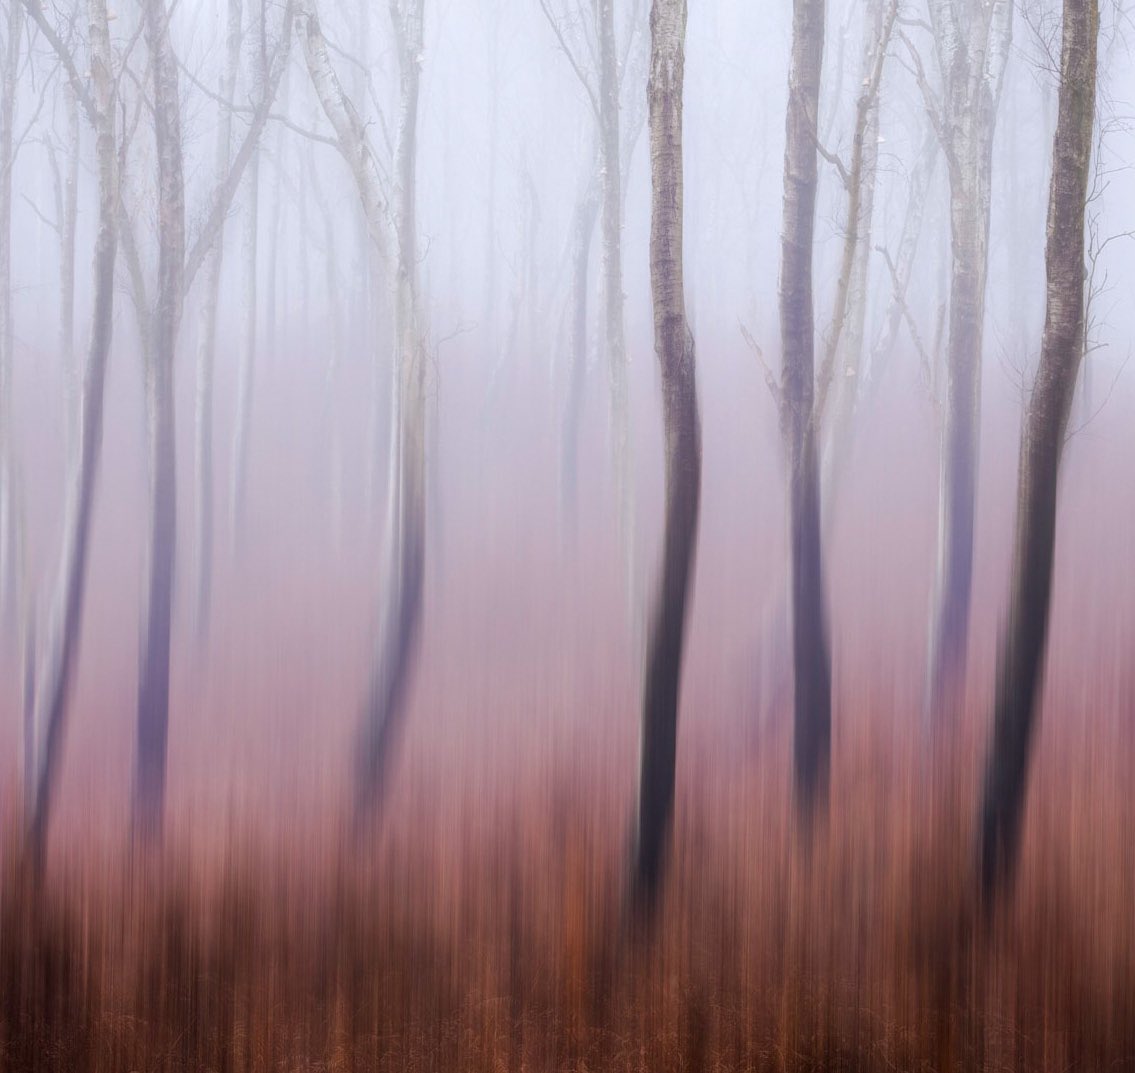 Black Birch #woodlandphotography